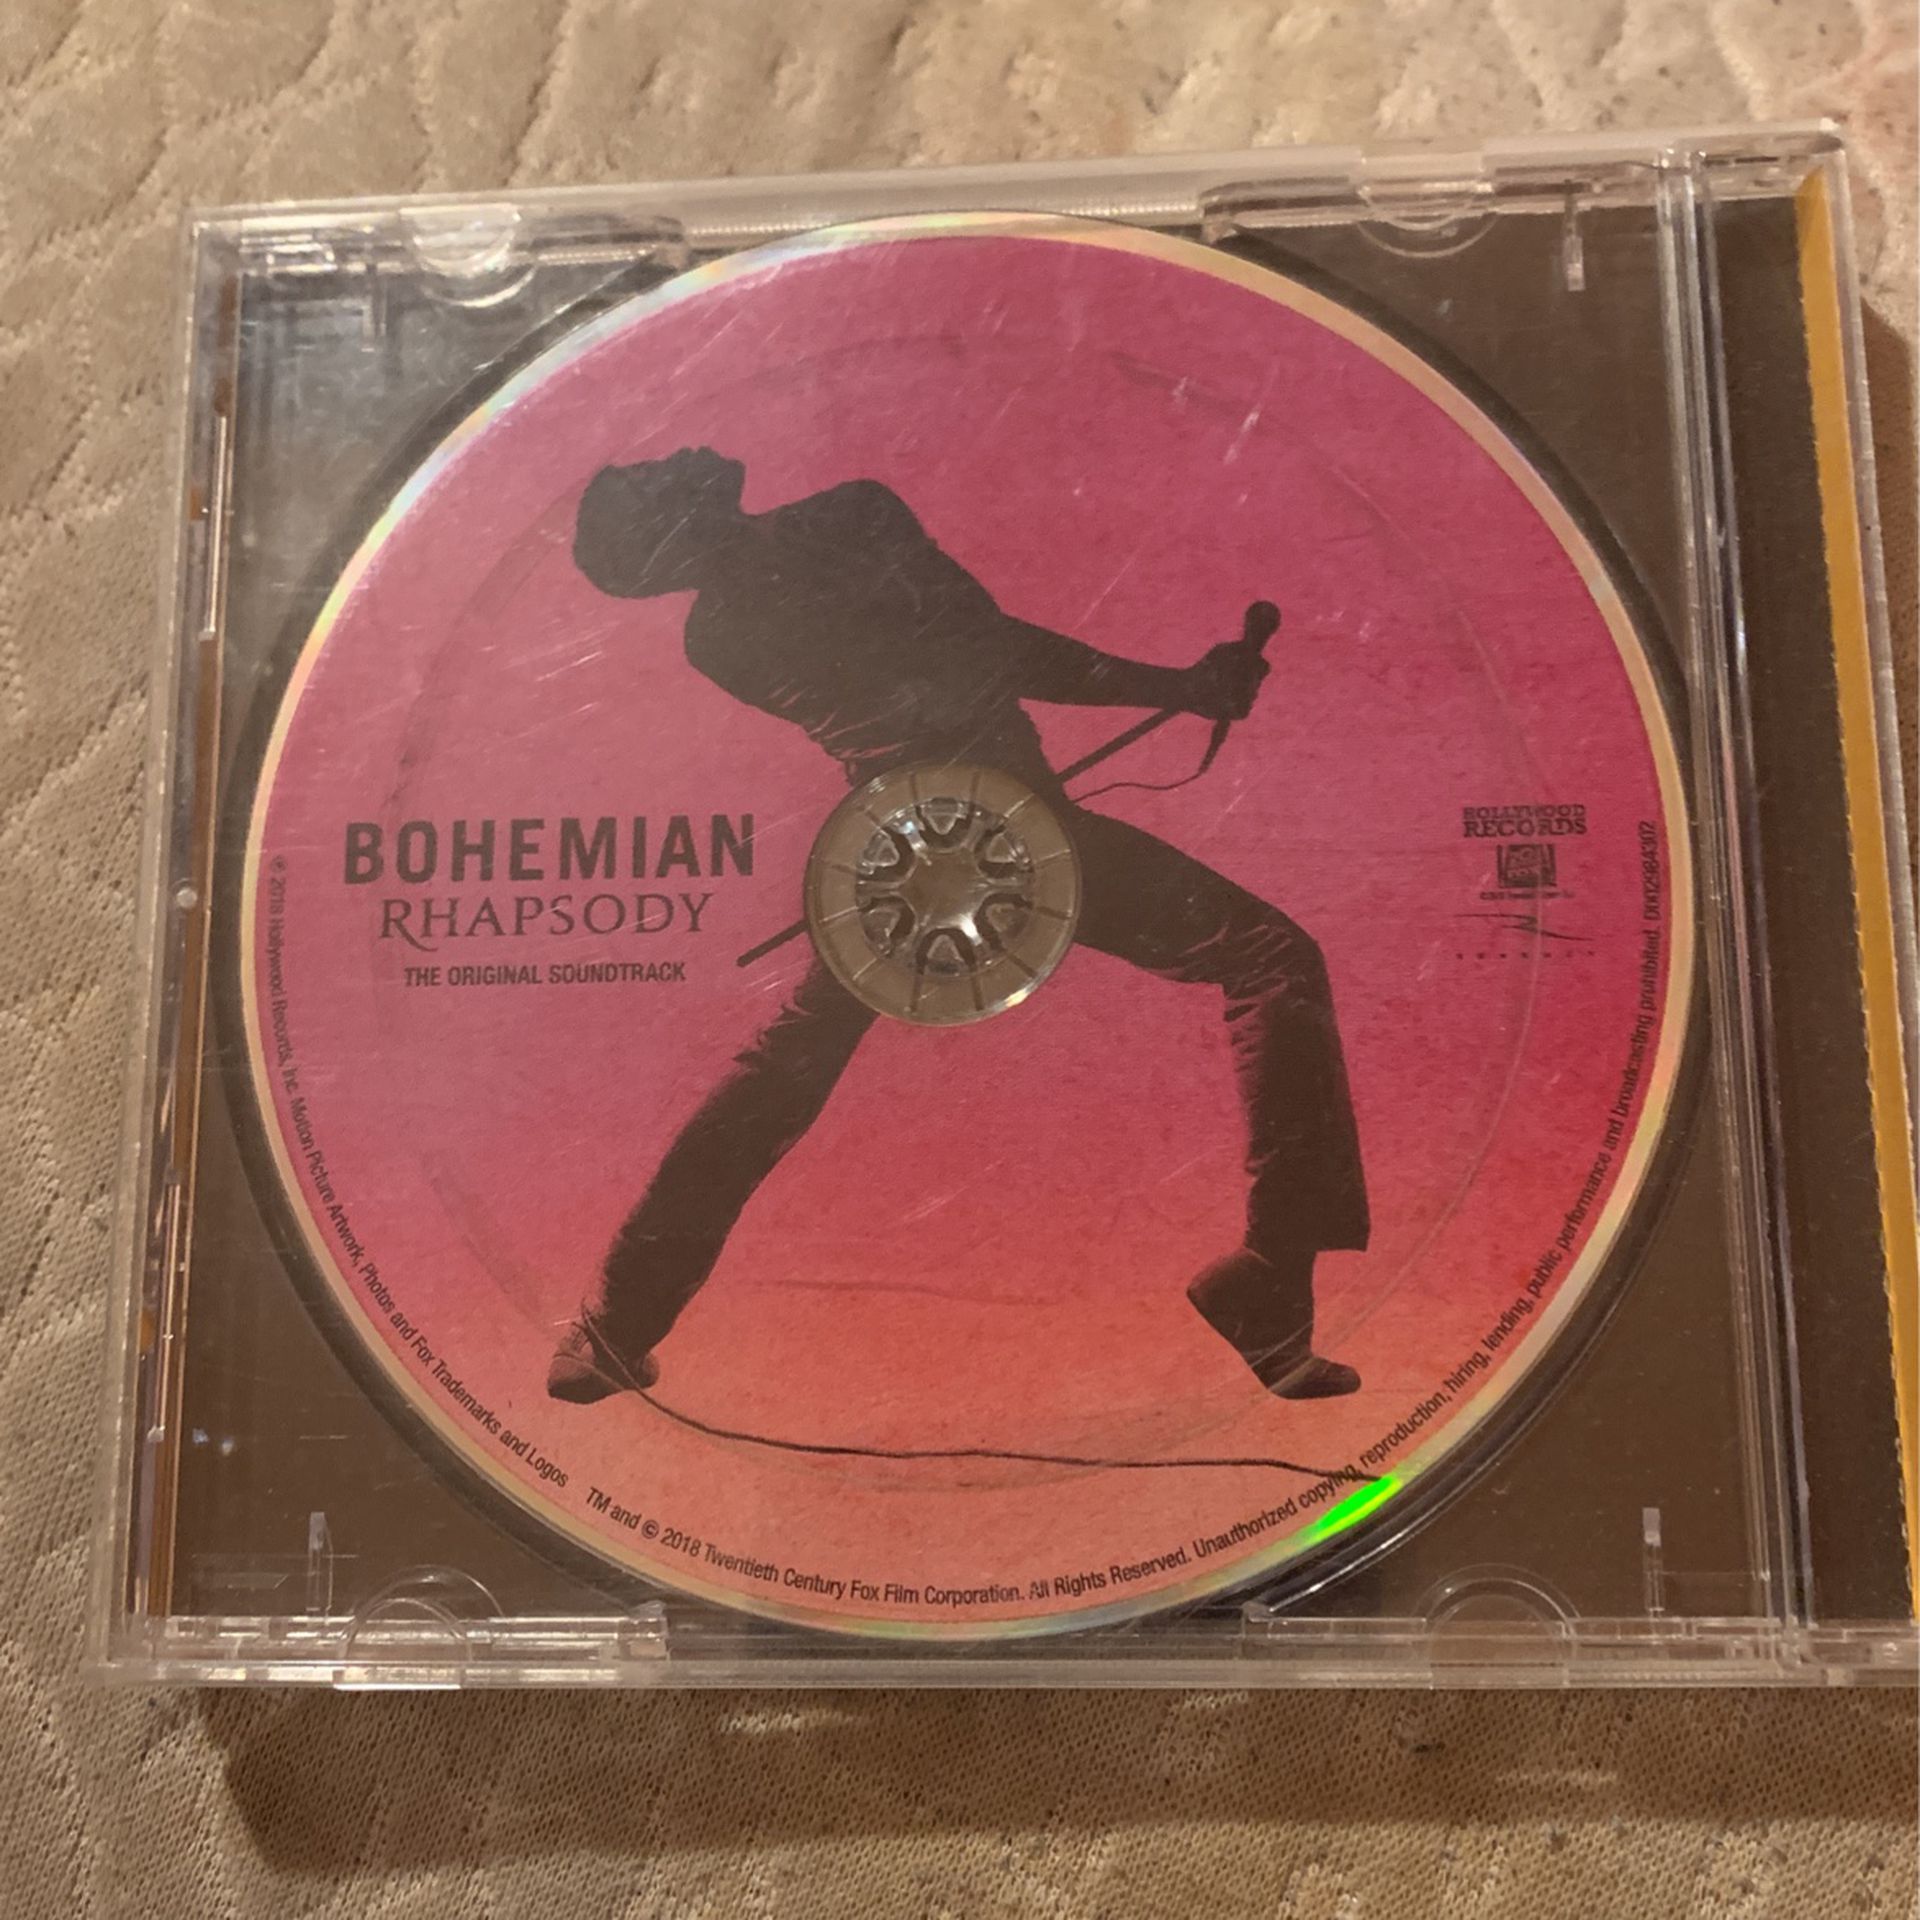 Bohemian Rhapsody (2018) Soundtrack. Missing front album cover